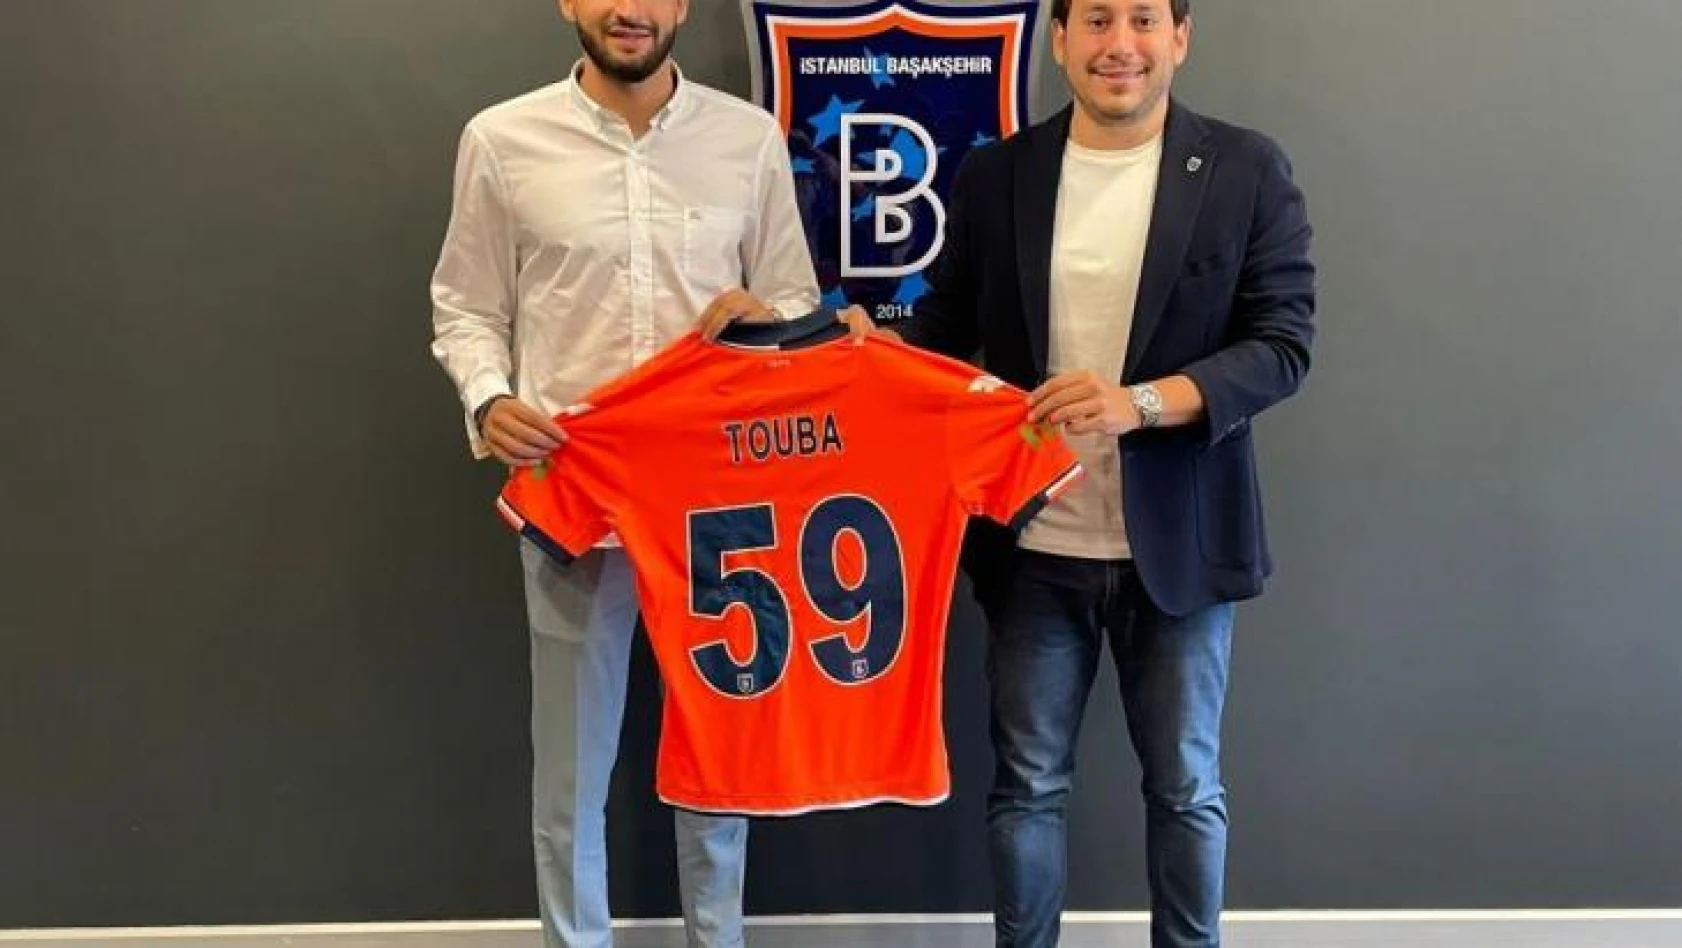 Başakşehir, Ahmed Touba'yı transfer etti